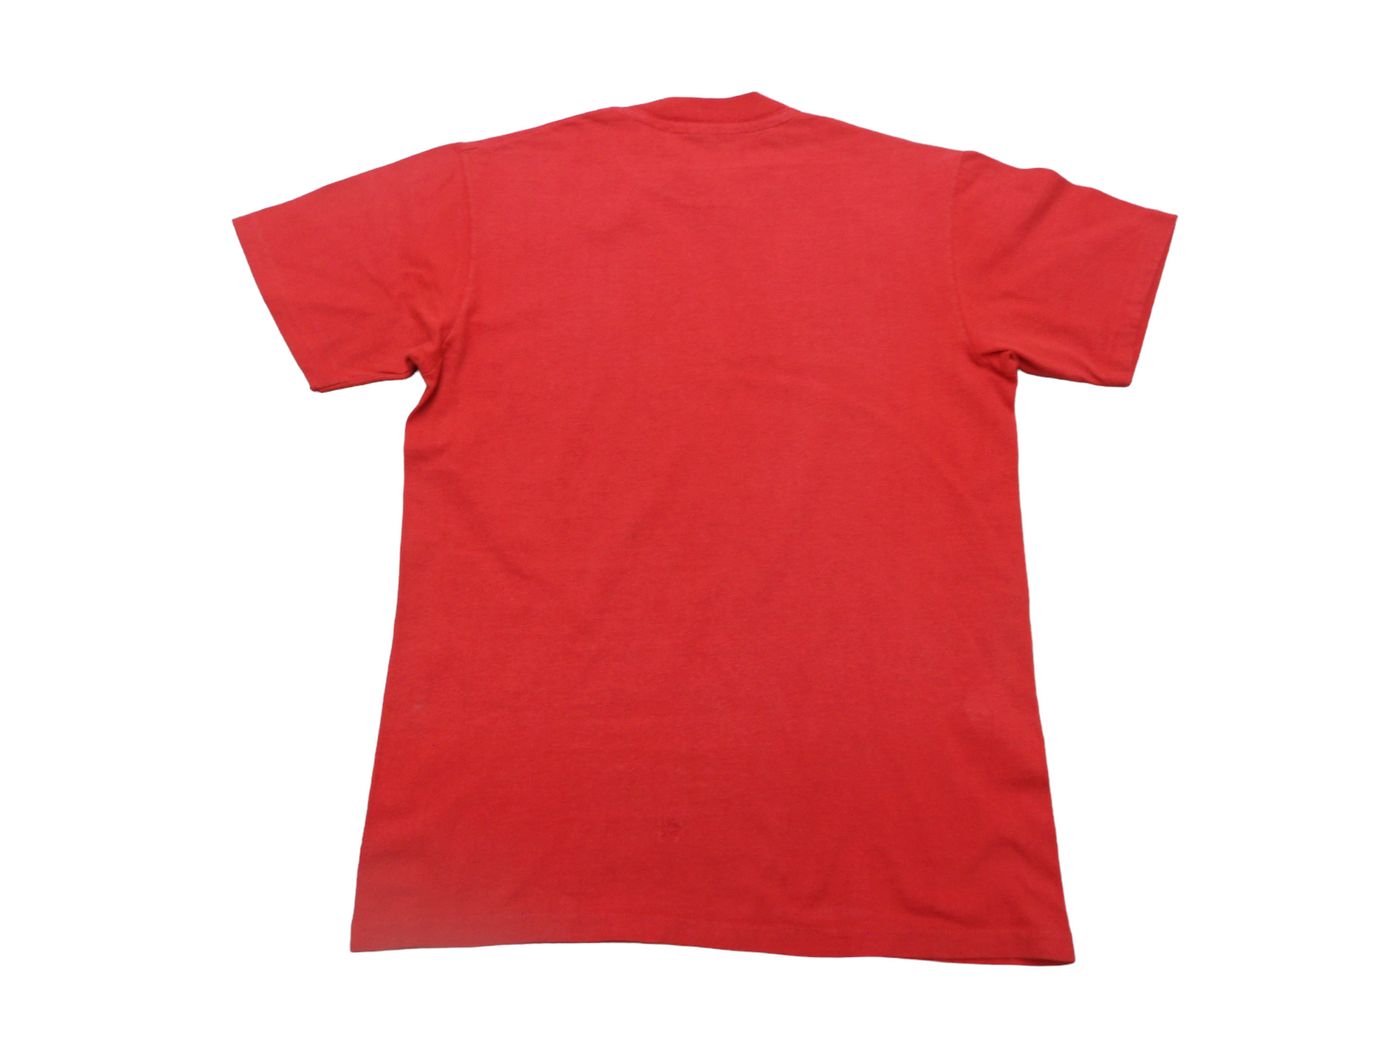 Vintage HANES BEEFY-T Red Cotton Men's T-Shirt Size - M